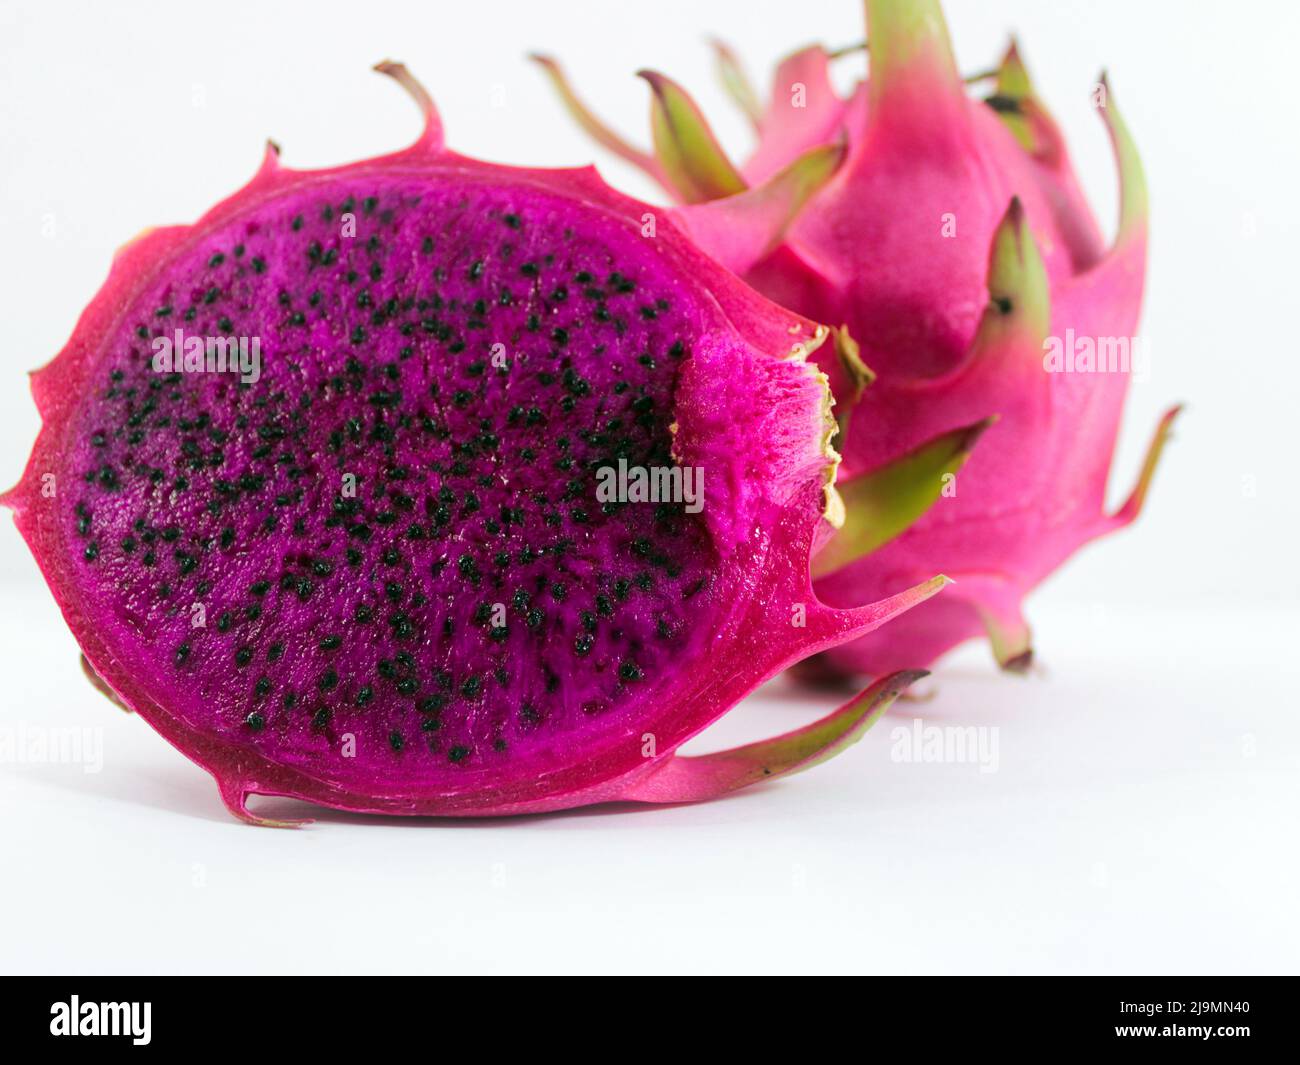 Pitaya or dragon fruit on white background Stock Photo